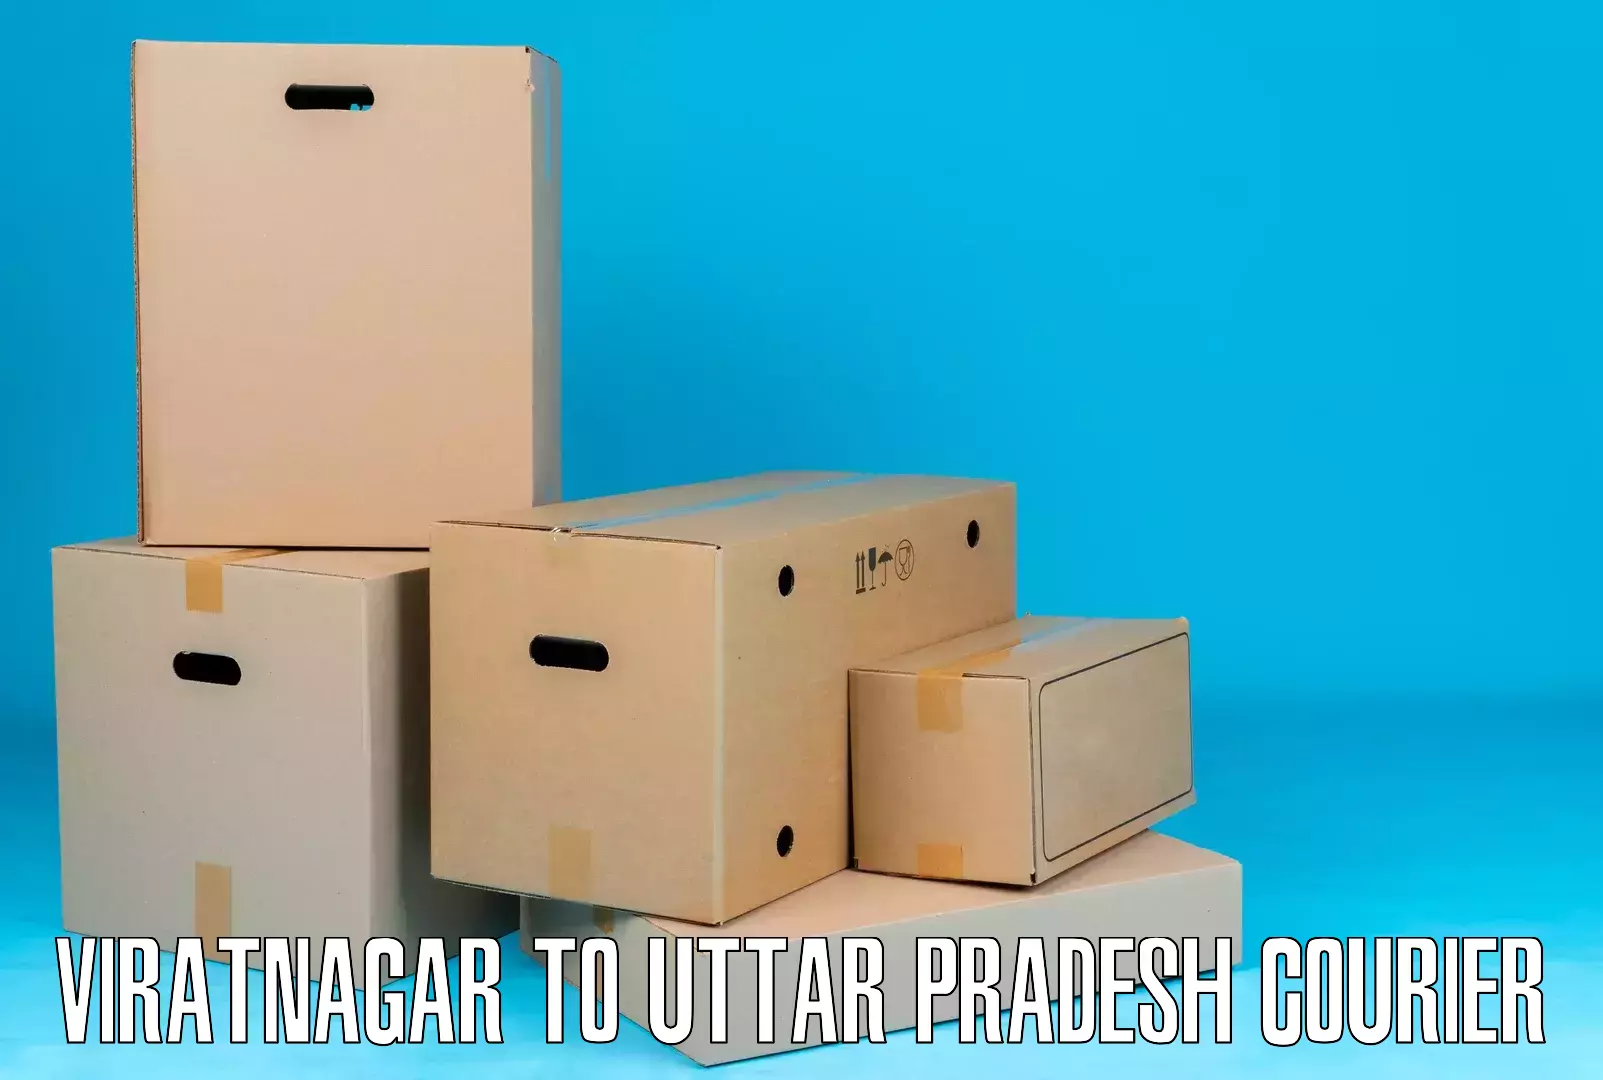 Customer-centric shipping Viratnagar to Uttar Pradesh